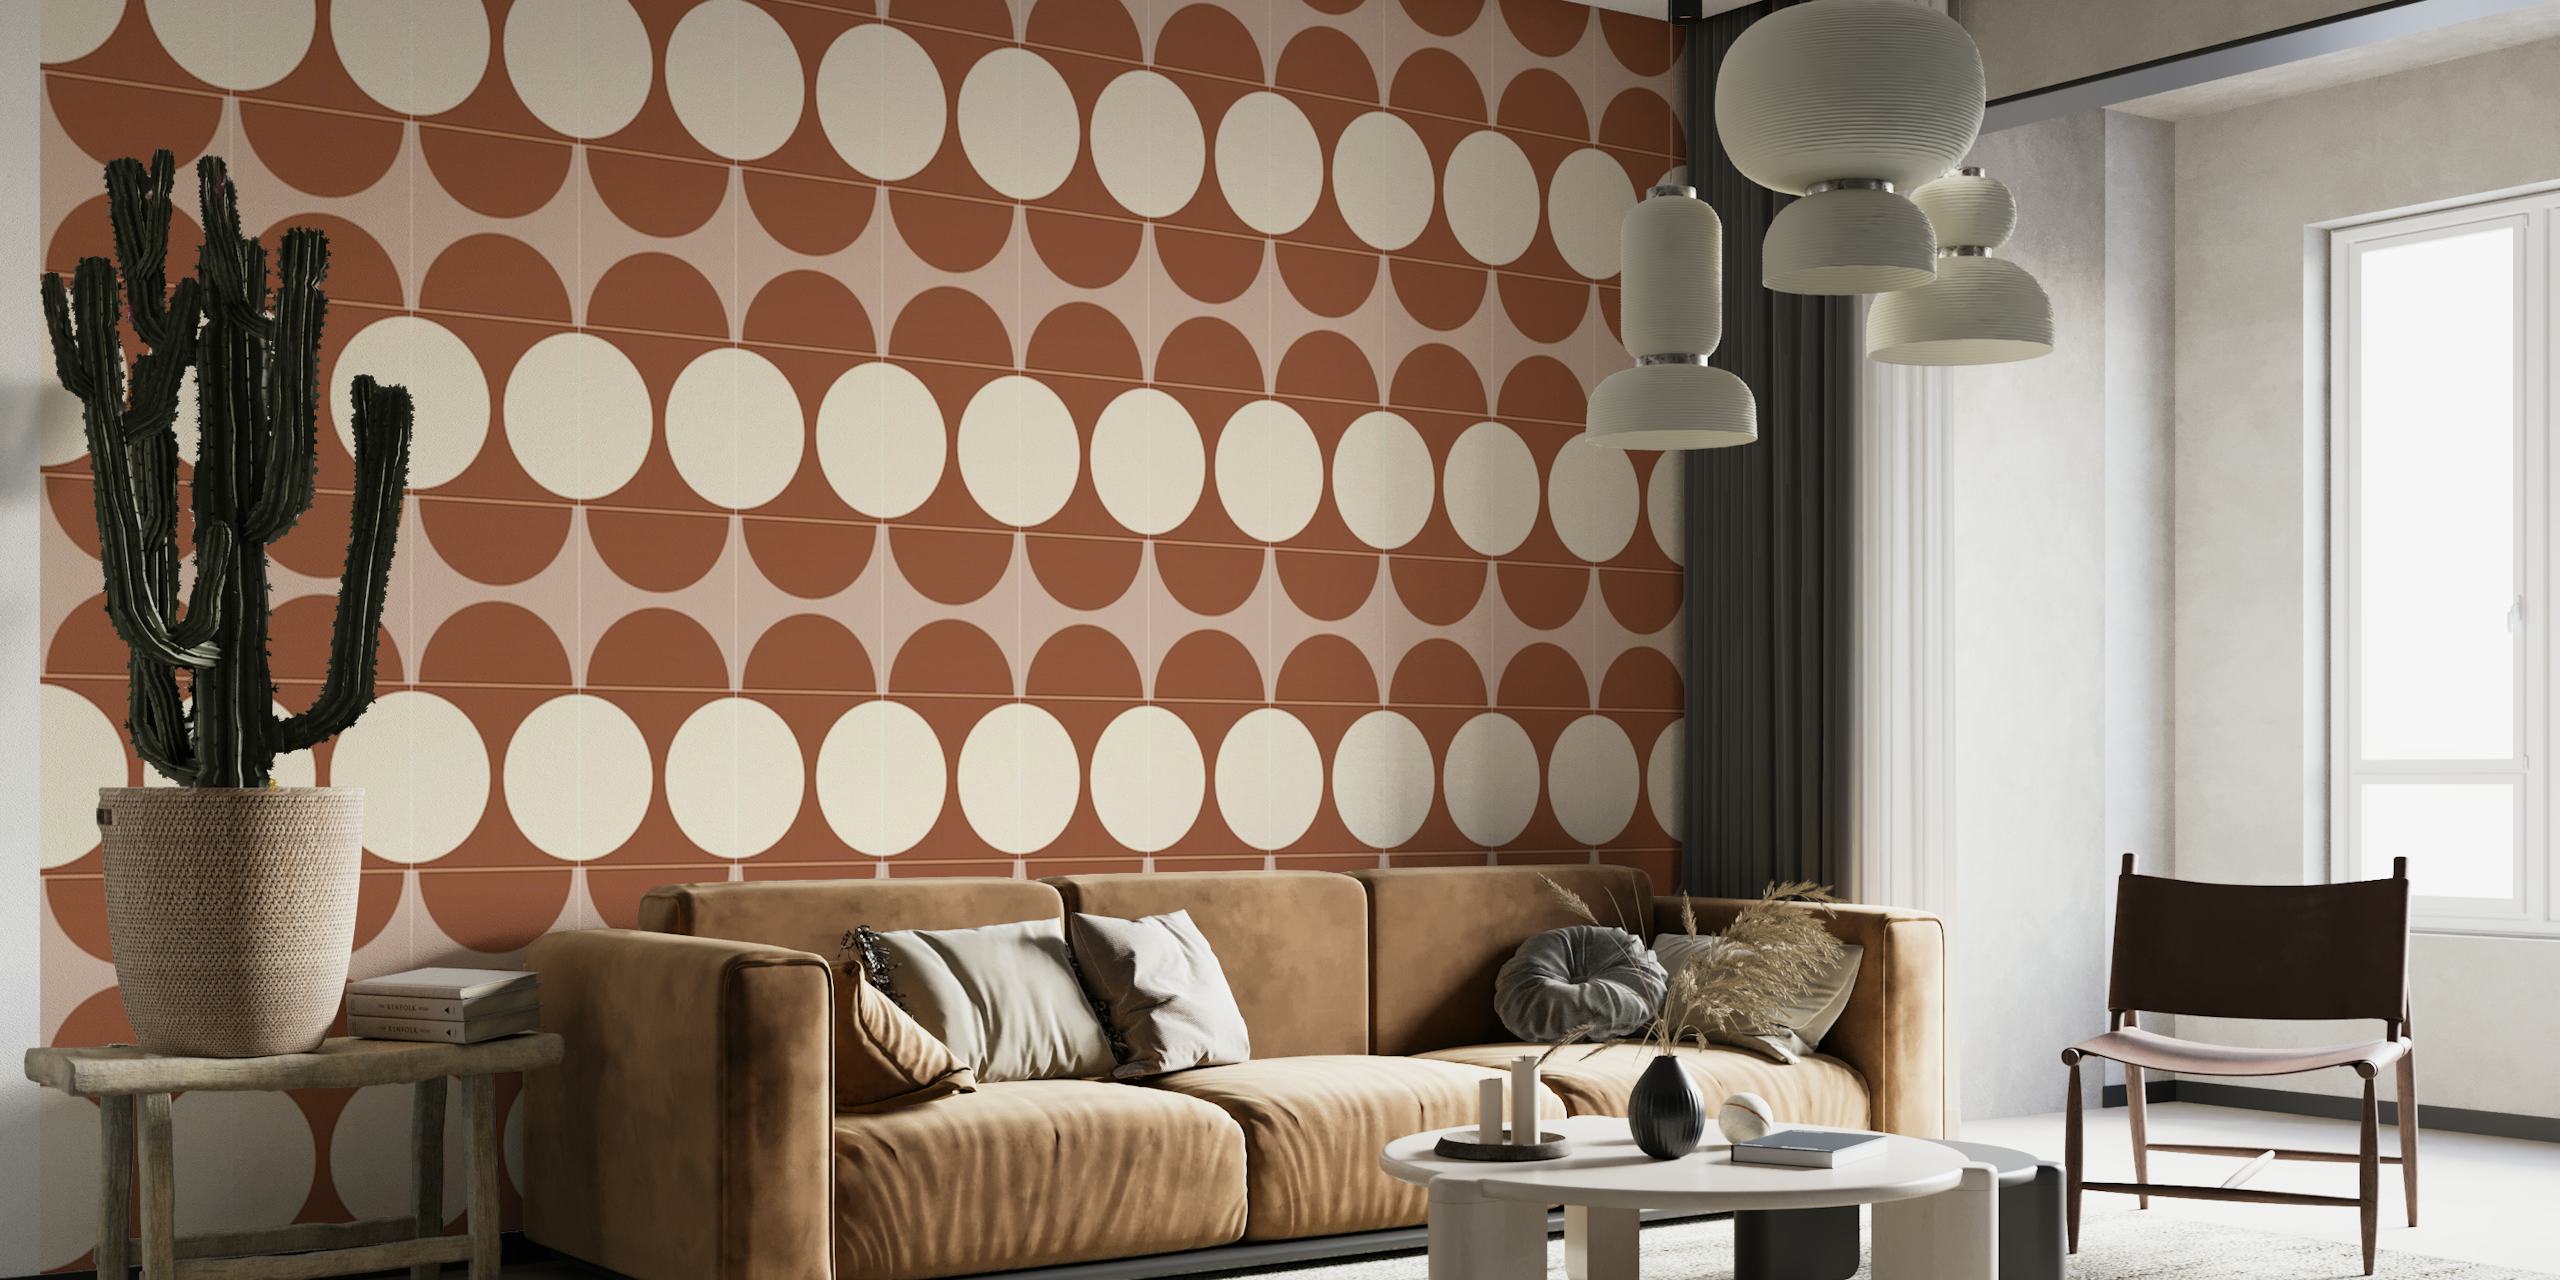 Cotto Tiles Cinnamon and Cream Optical wallpaper